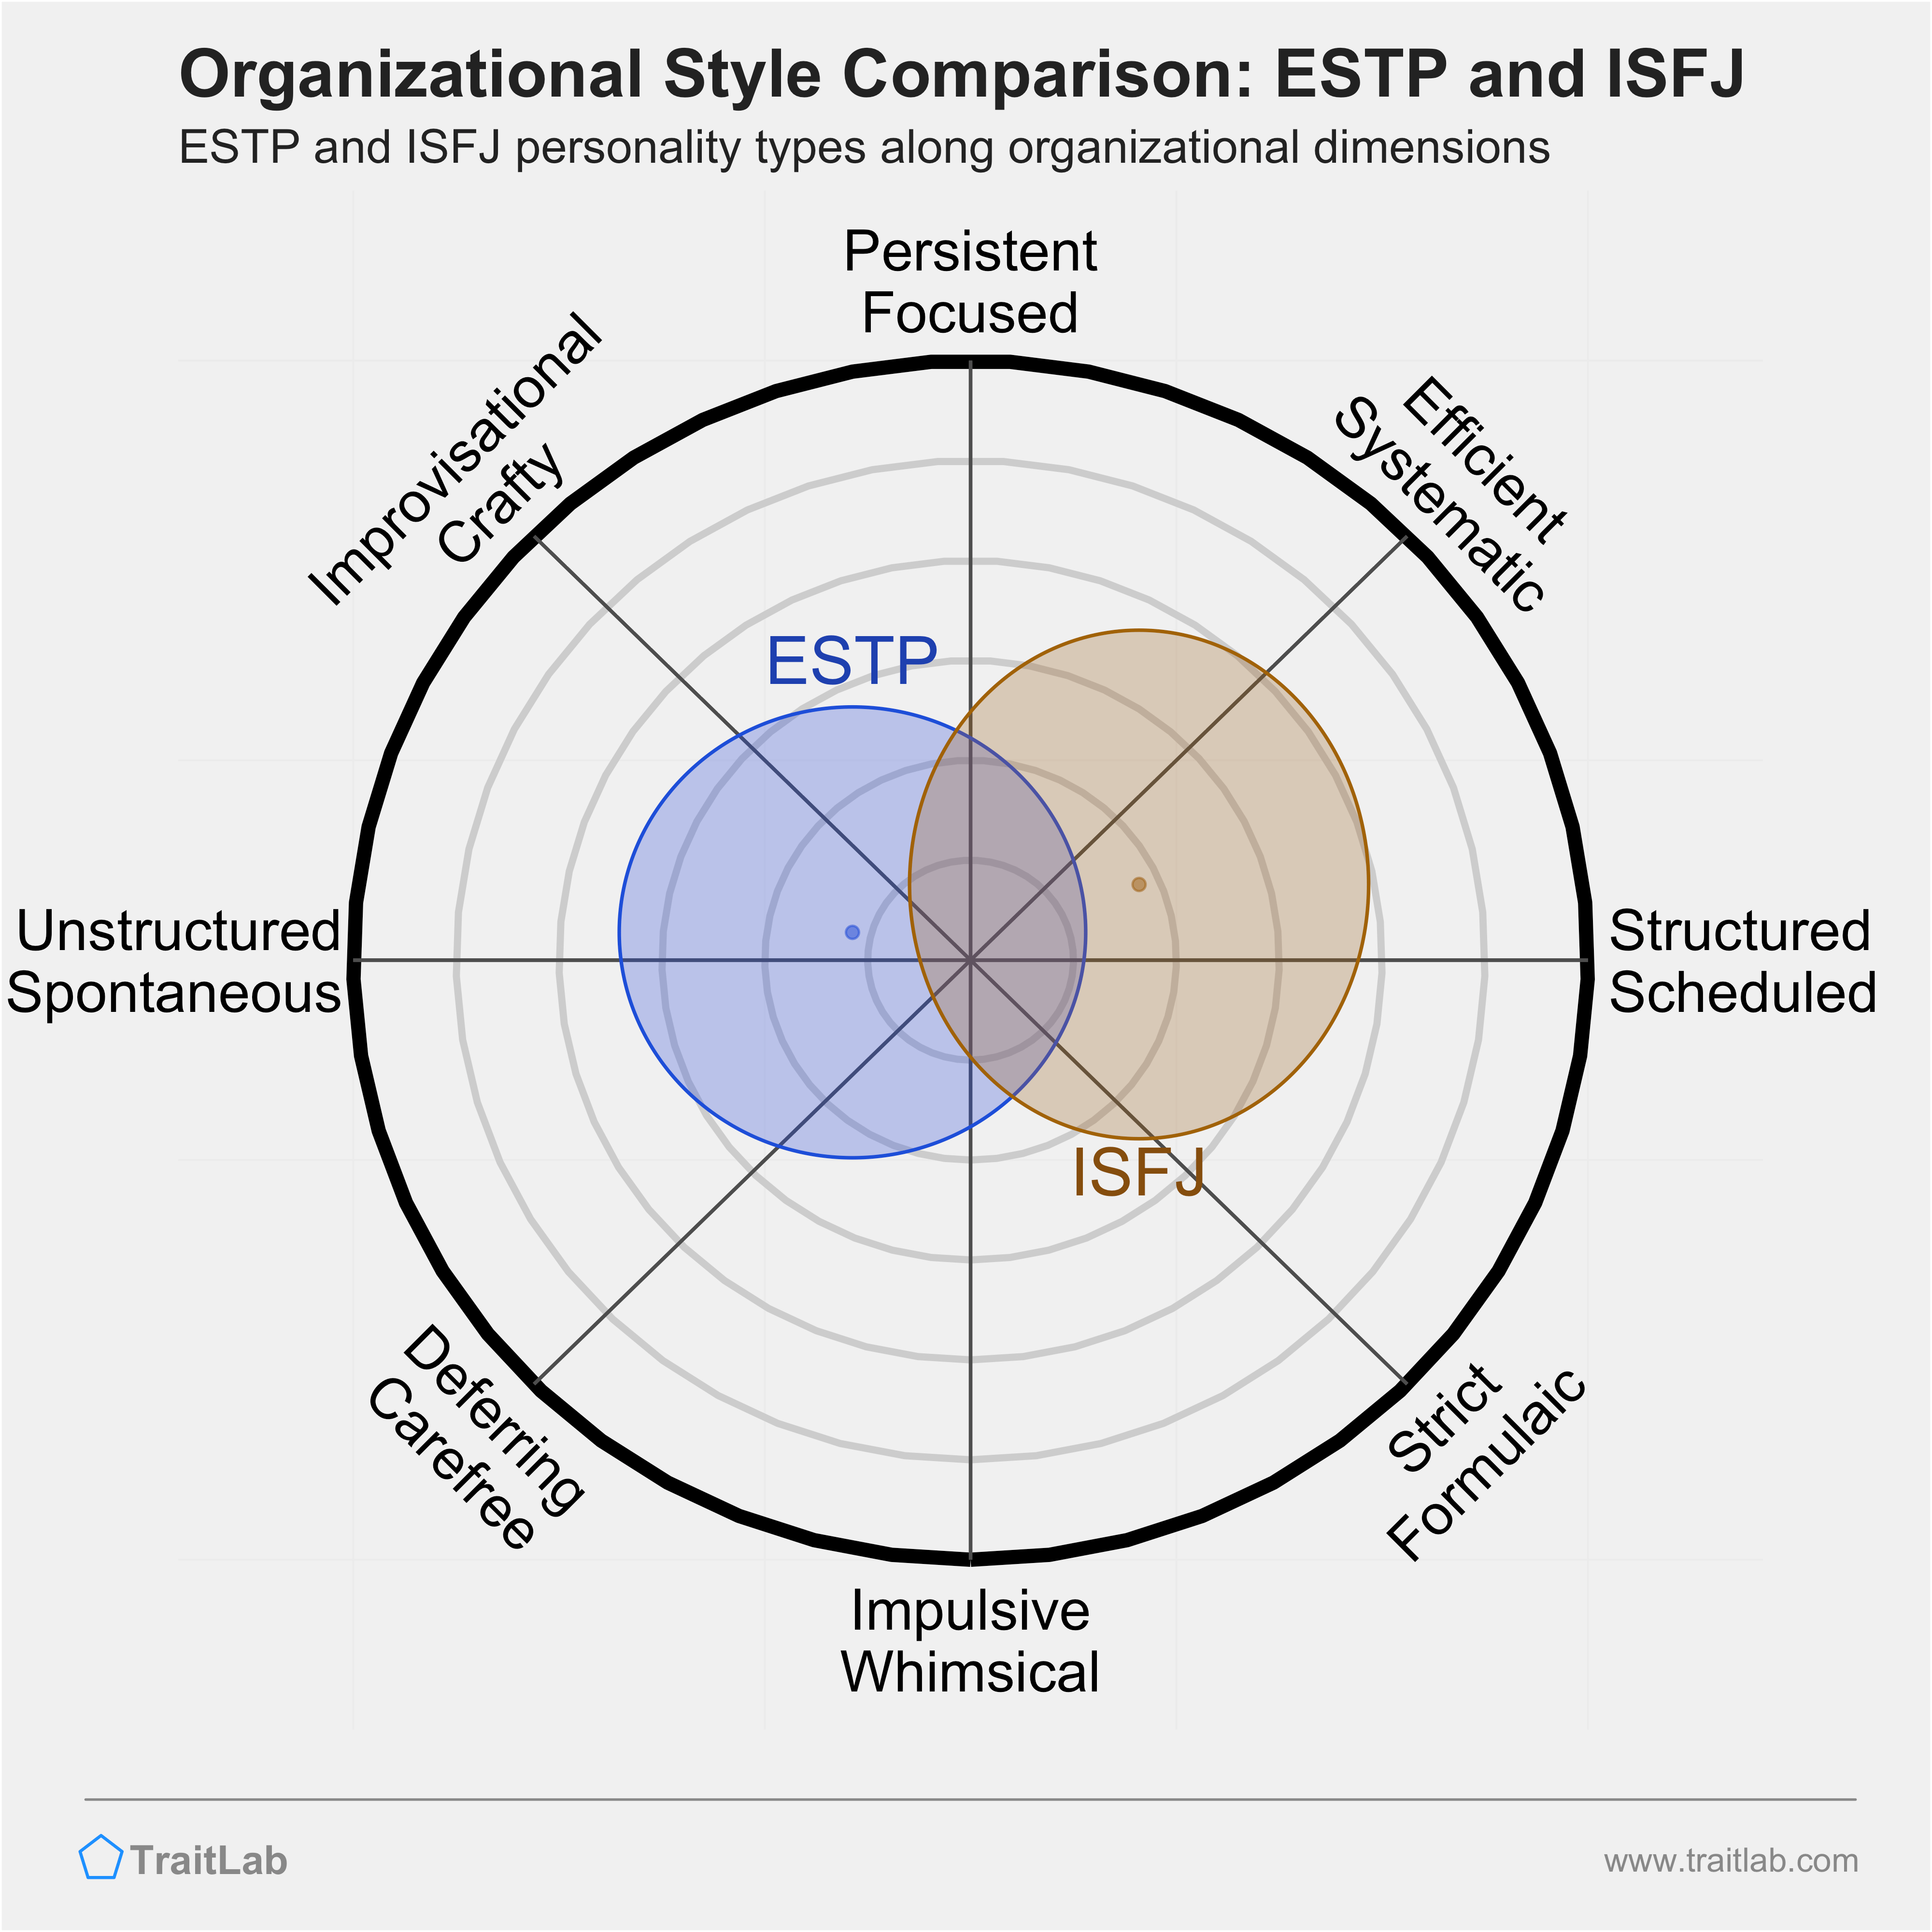 ESTP and ISFJ comparison across organizational dimensions